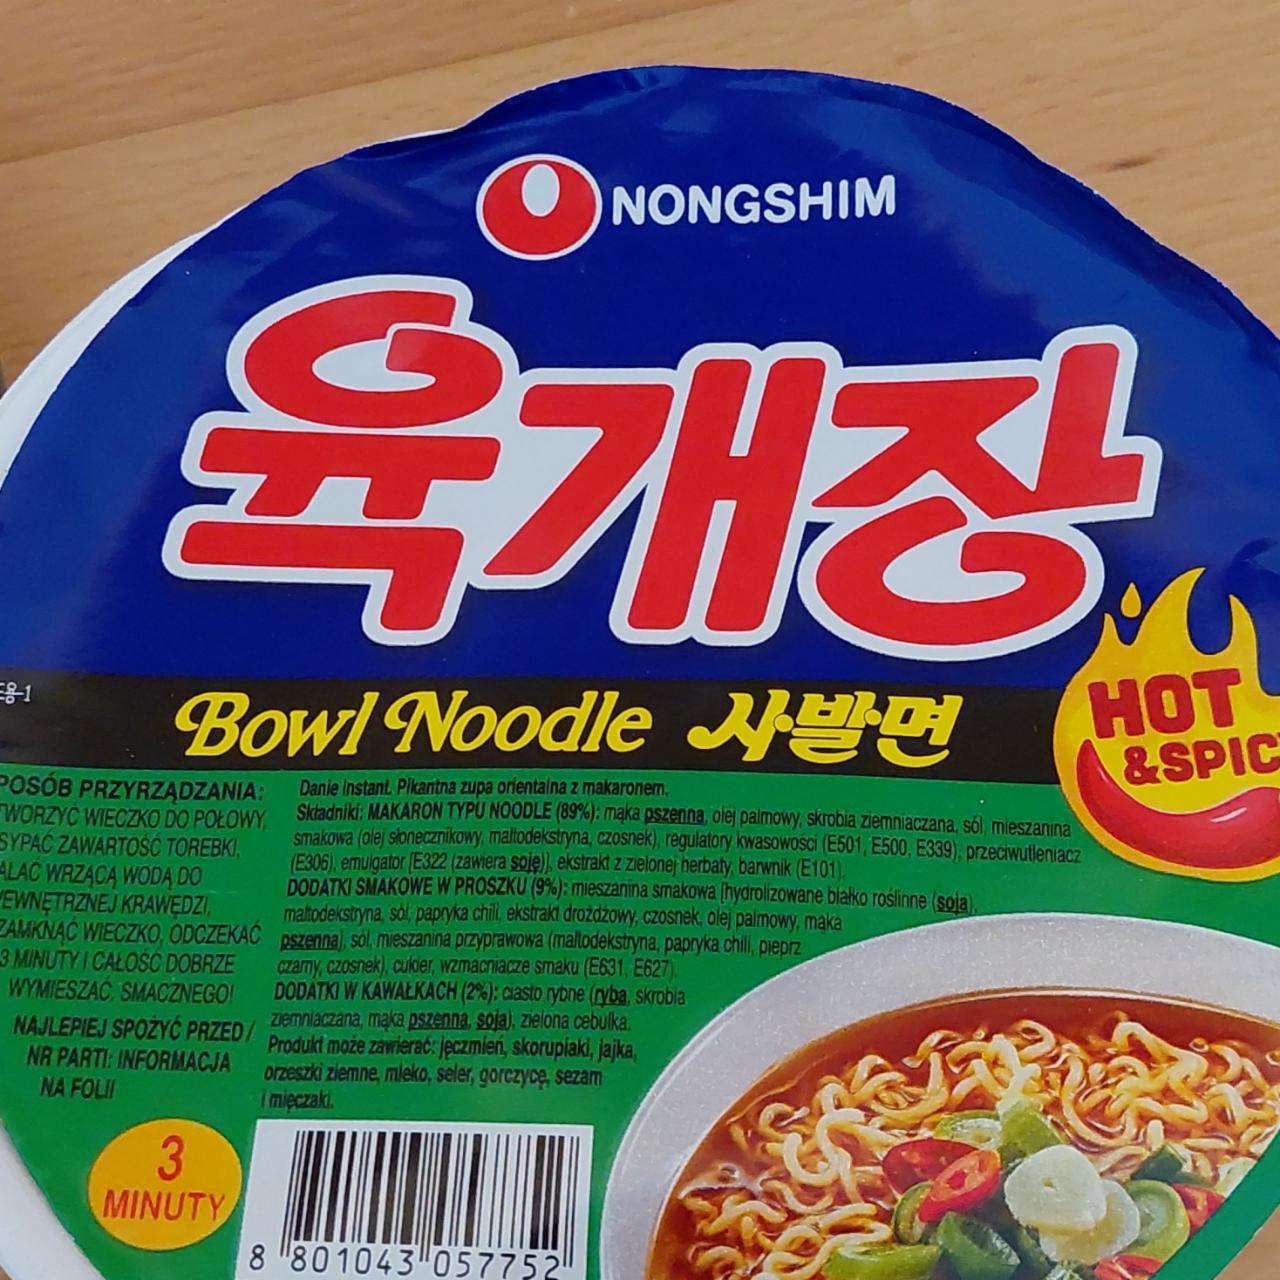 Zdjęcia - Bowl Noodles Hot & Spicy Nongshim